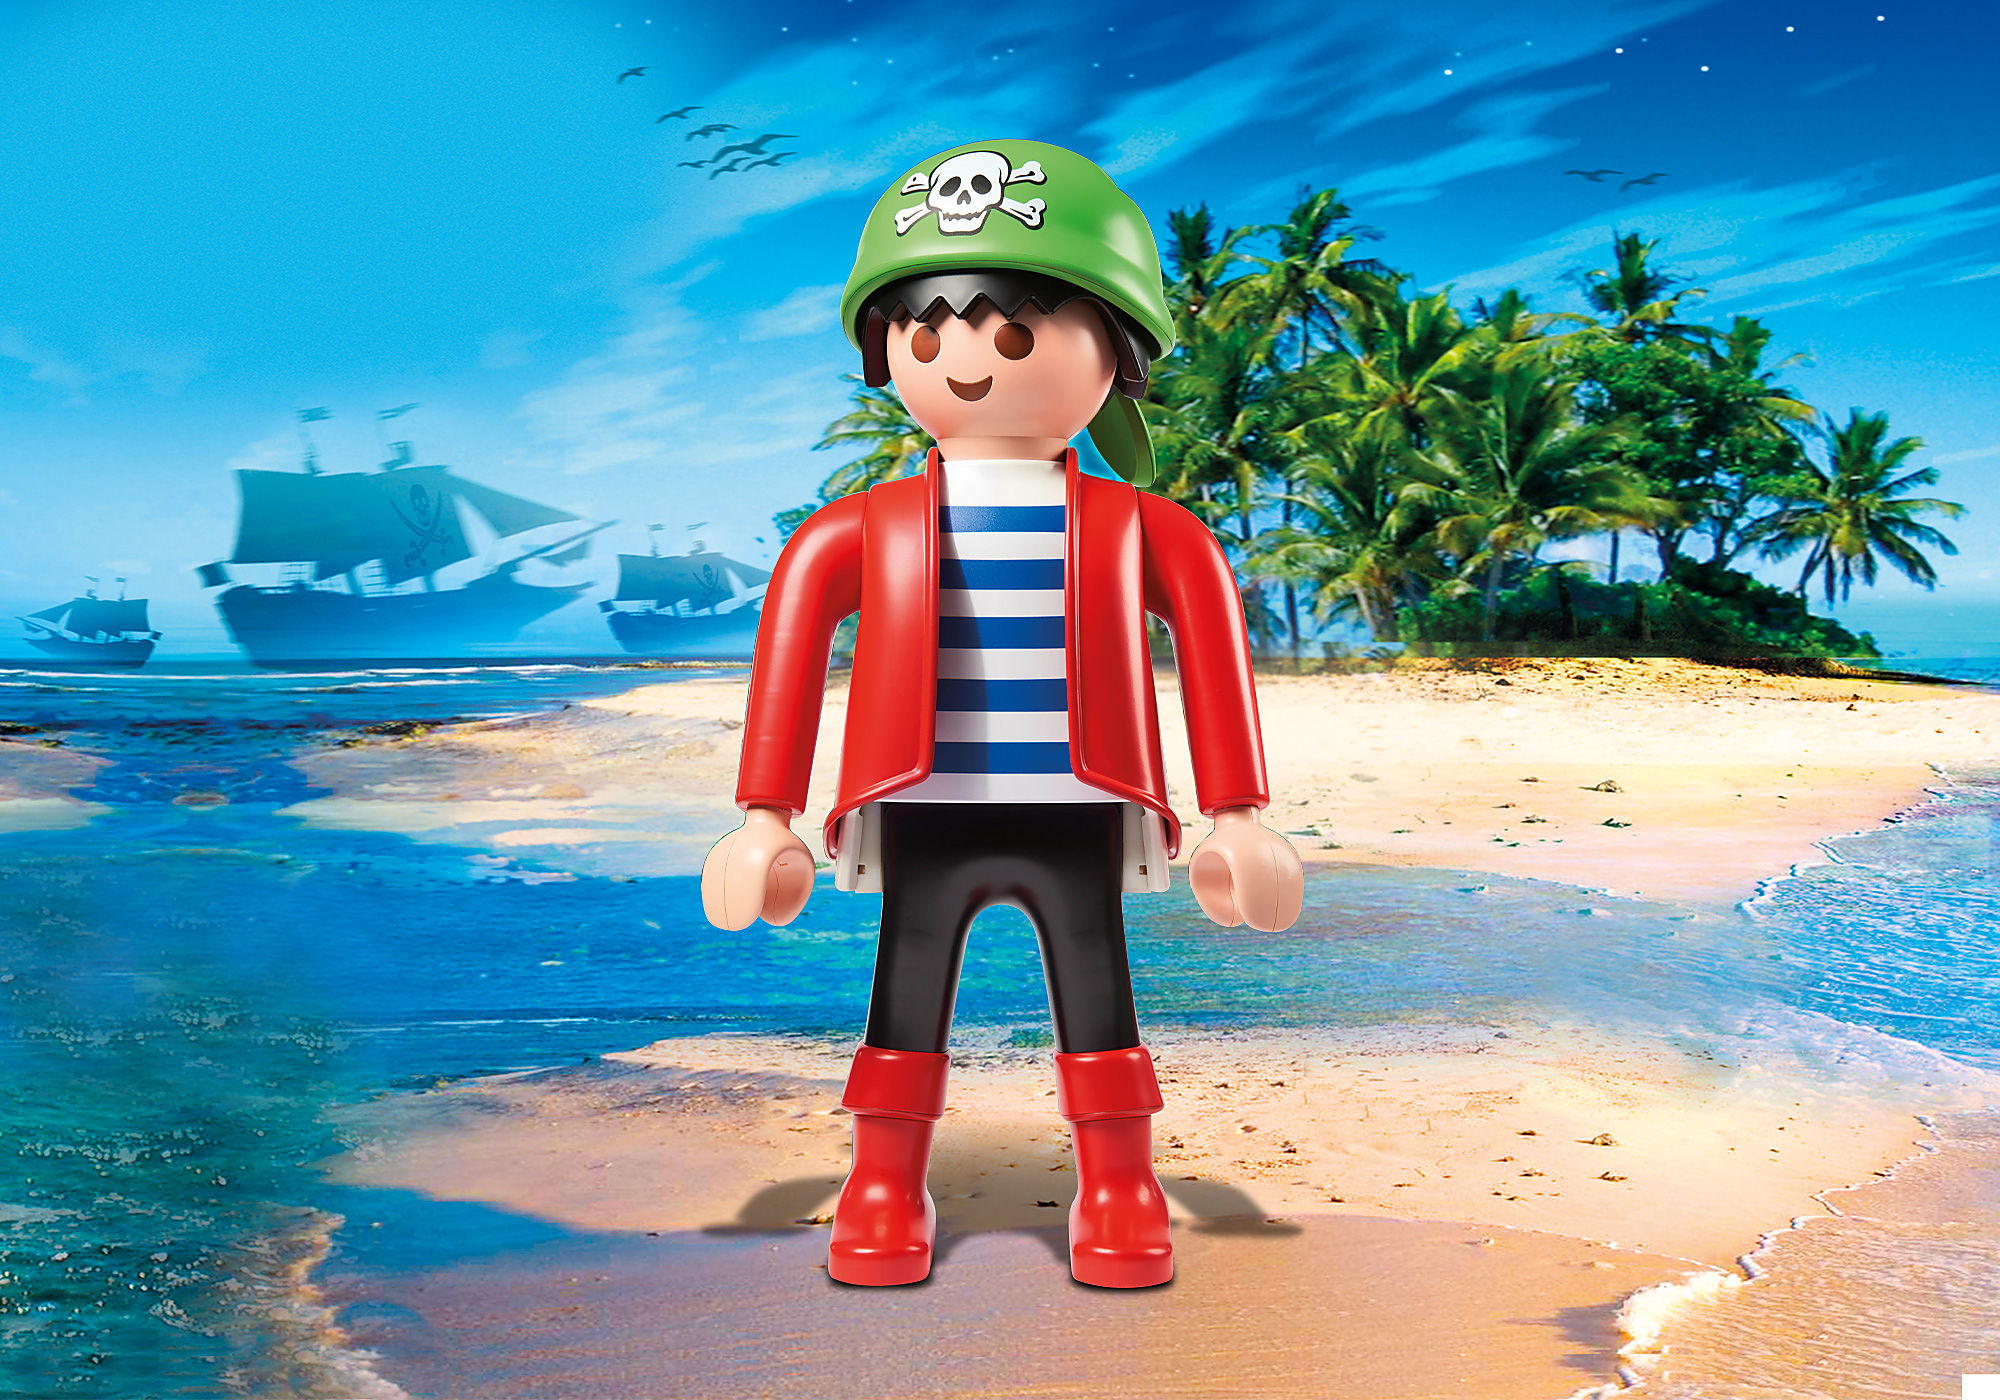 71168 - Playmobil - Explorateur et alligator Playmobil : King Jouet, Playmobil  Playmobil - Jeux d'imitation & Mondes imaginaires